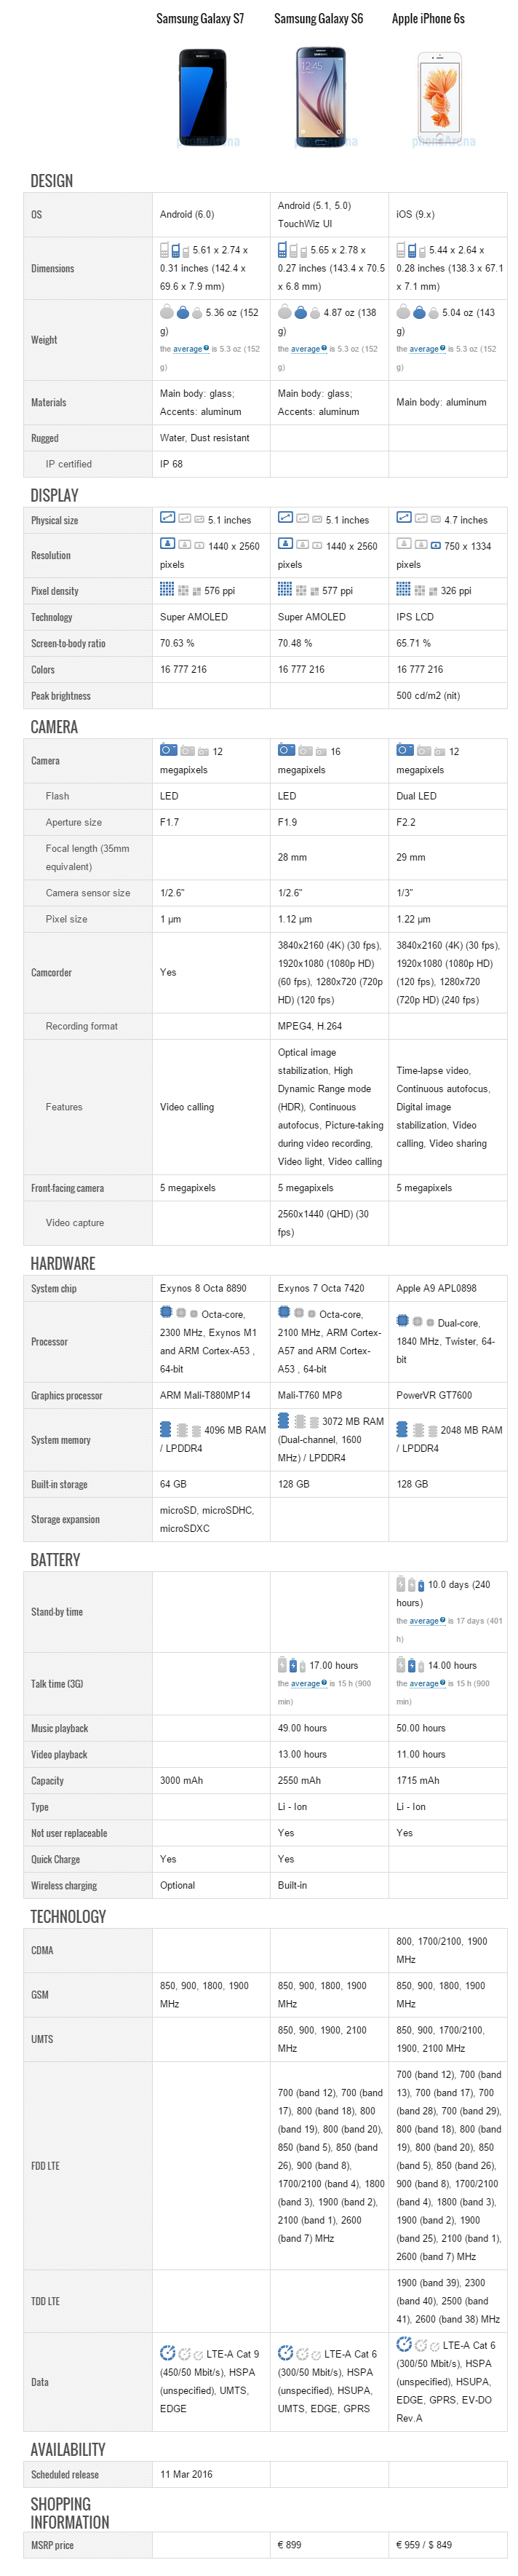 Samsung Galaxy S7 vs konkurrens - iDevice.ro